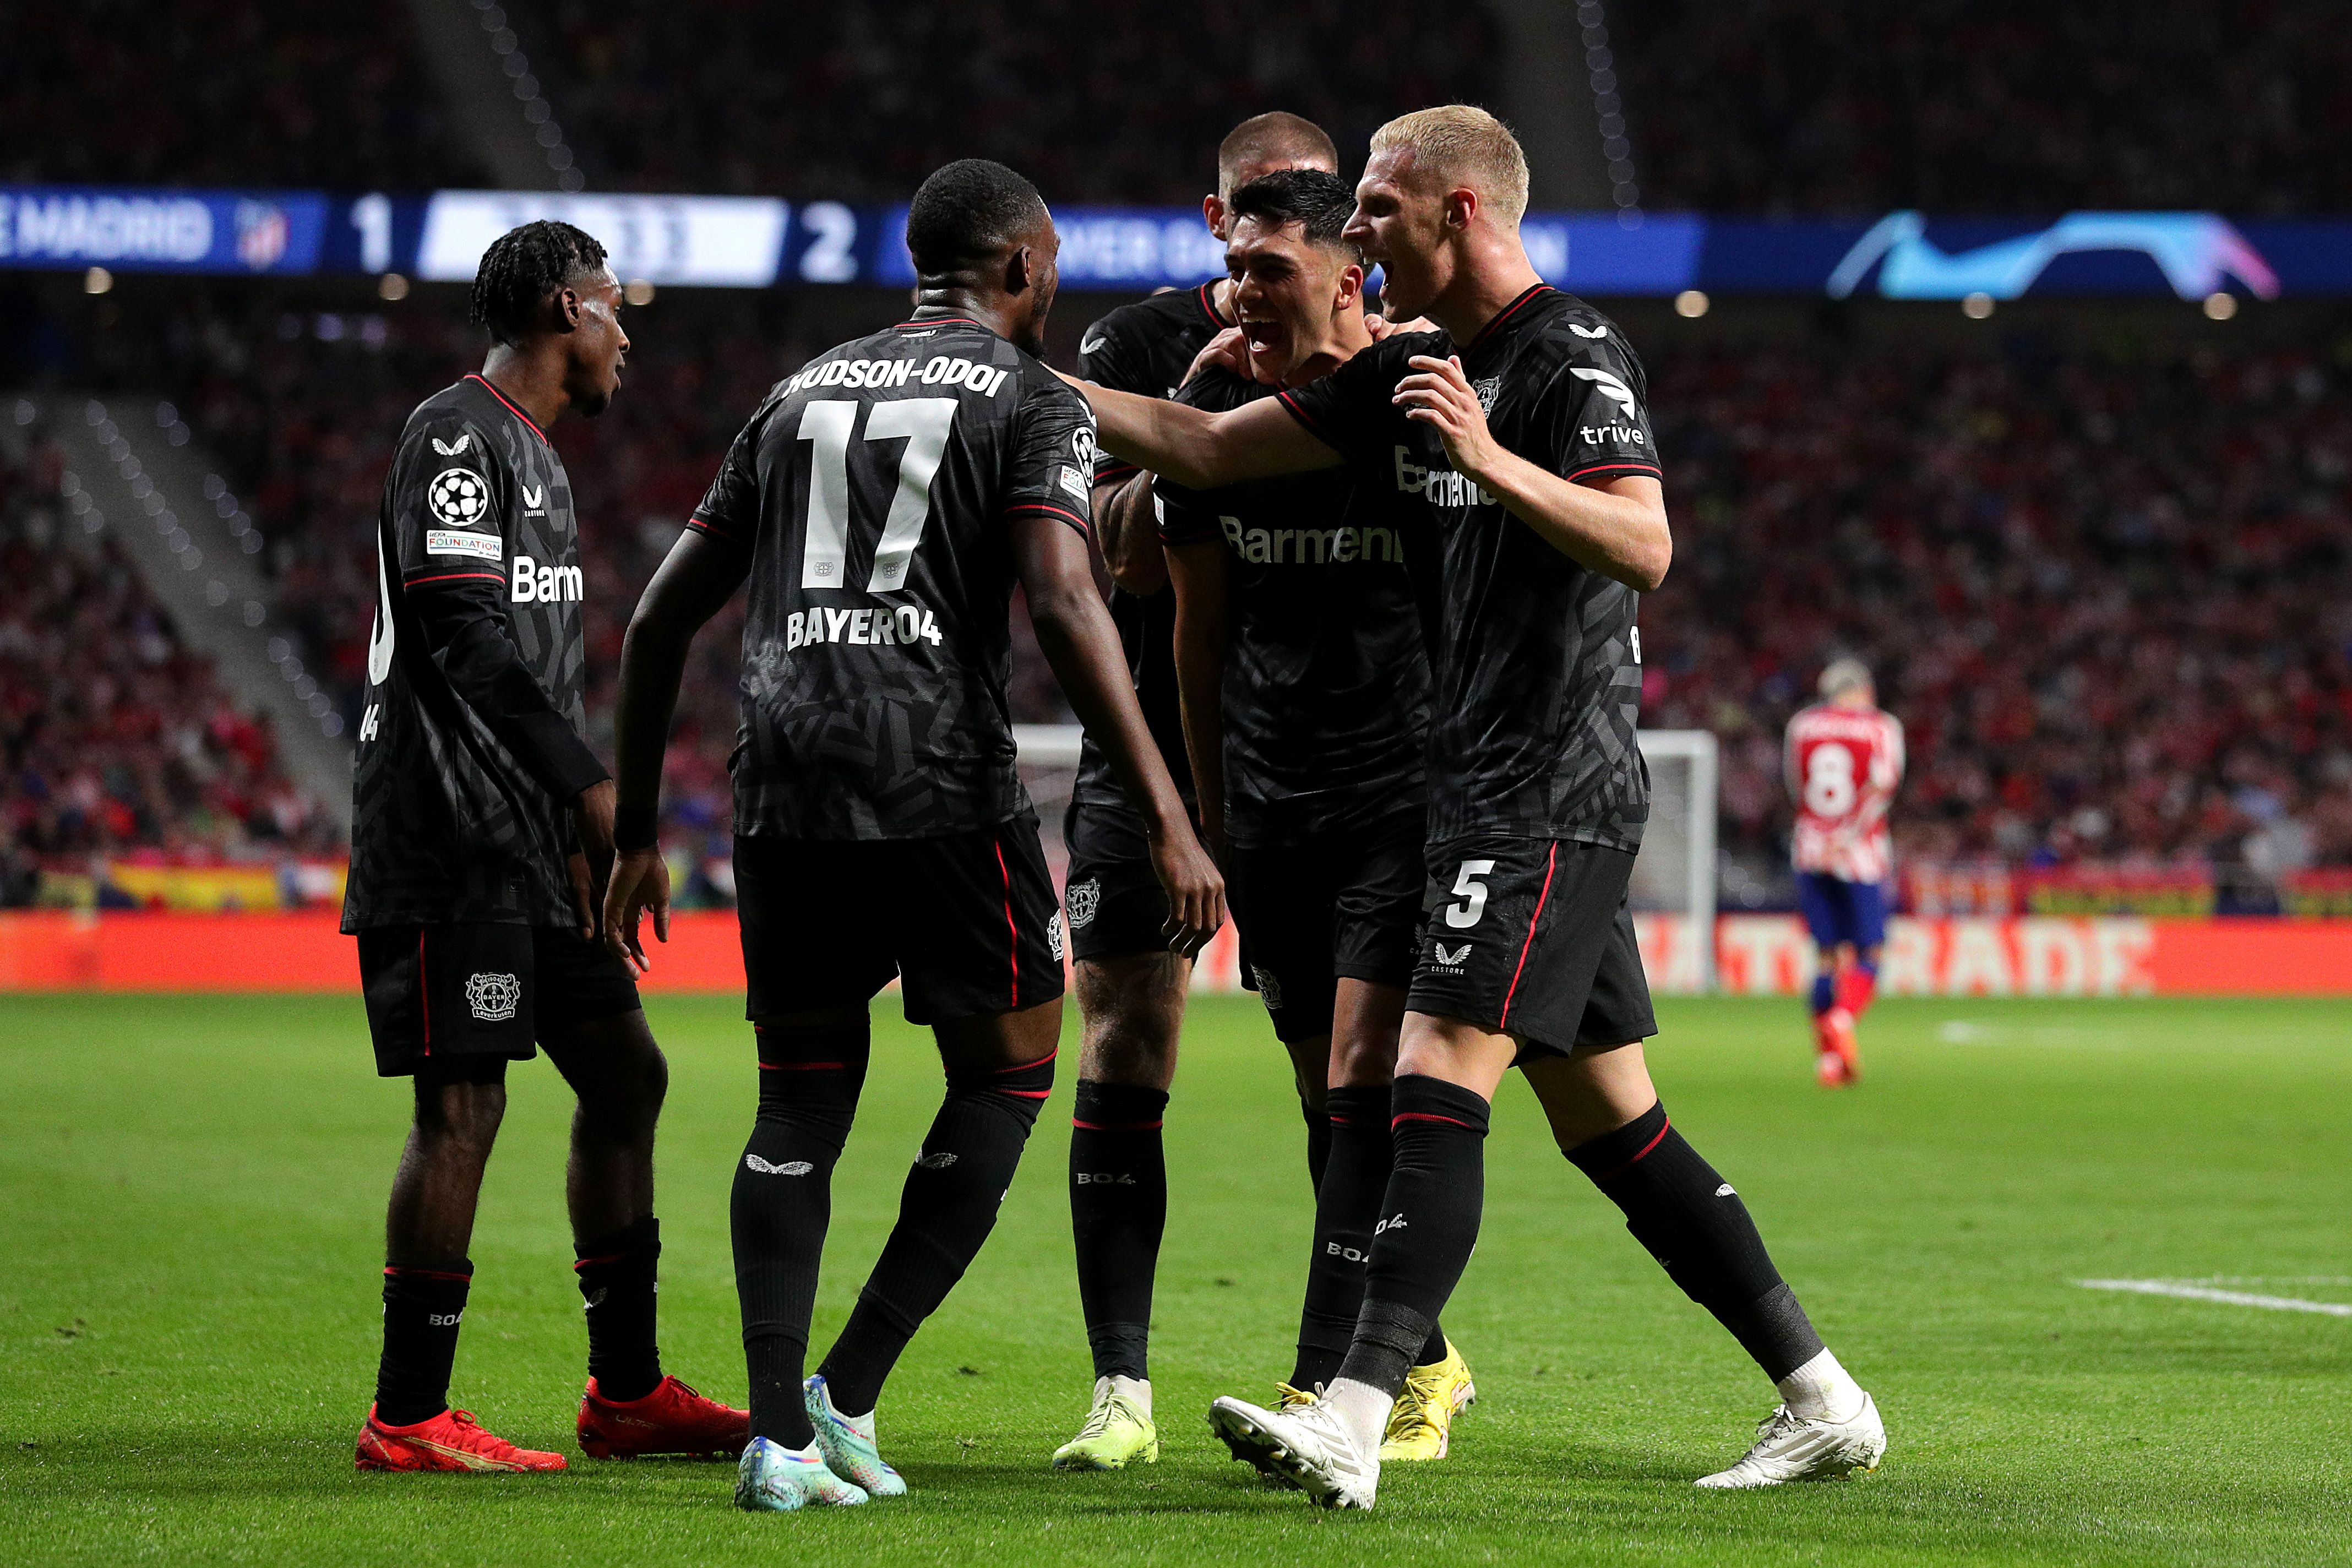 Bayer Leverkusen celebrate scoring in the Champions League.